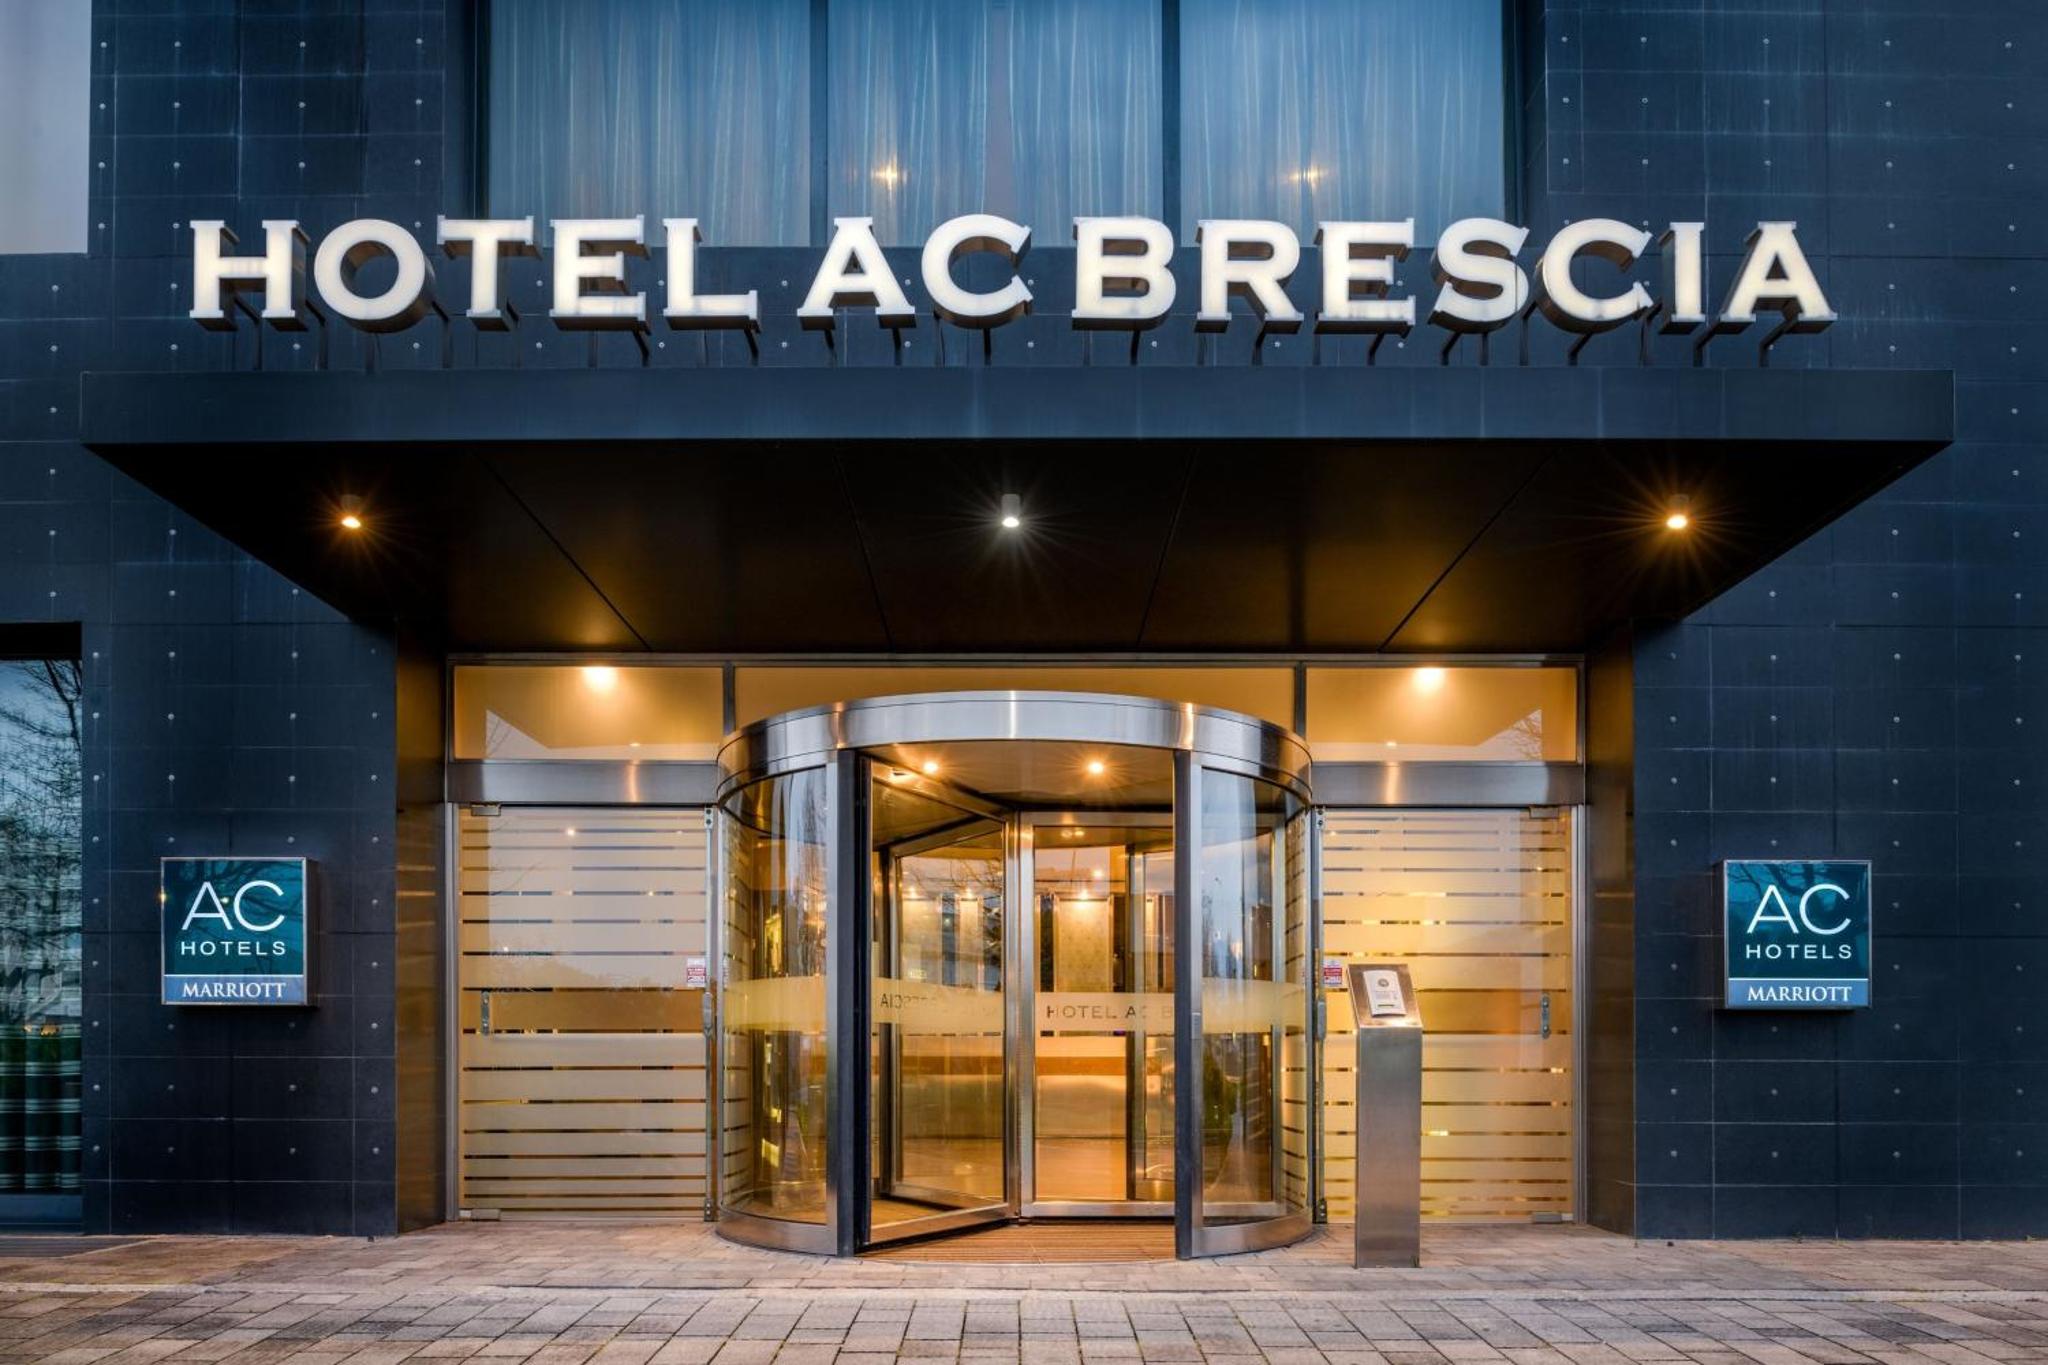 AC Hotel Brescia